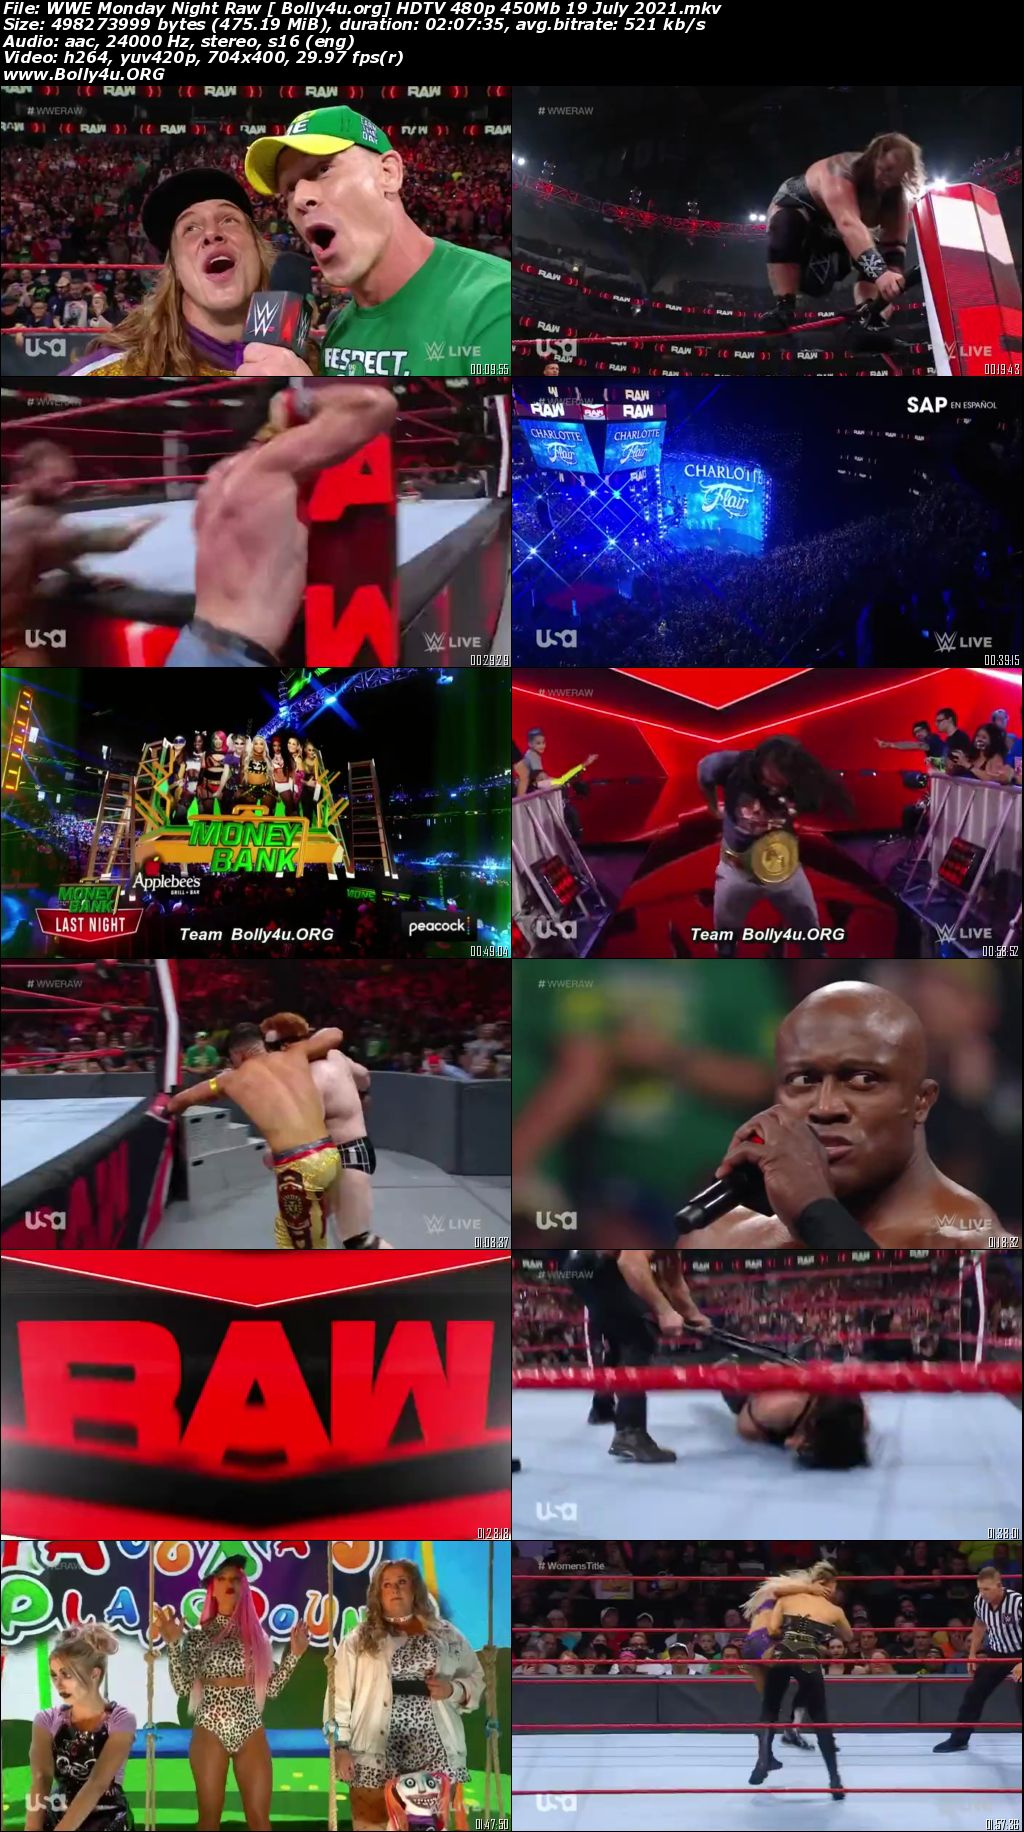 WWE Monday Night Raw HDTV 480p 450Mb 19 July 2021 Download